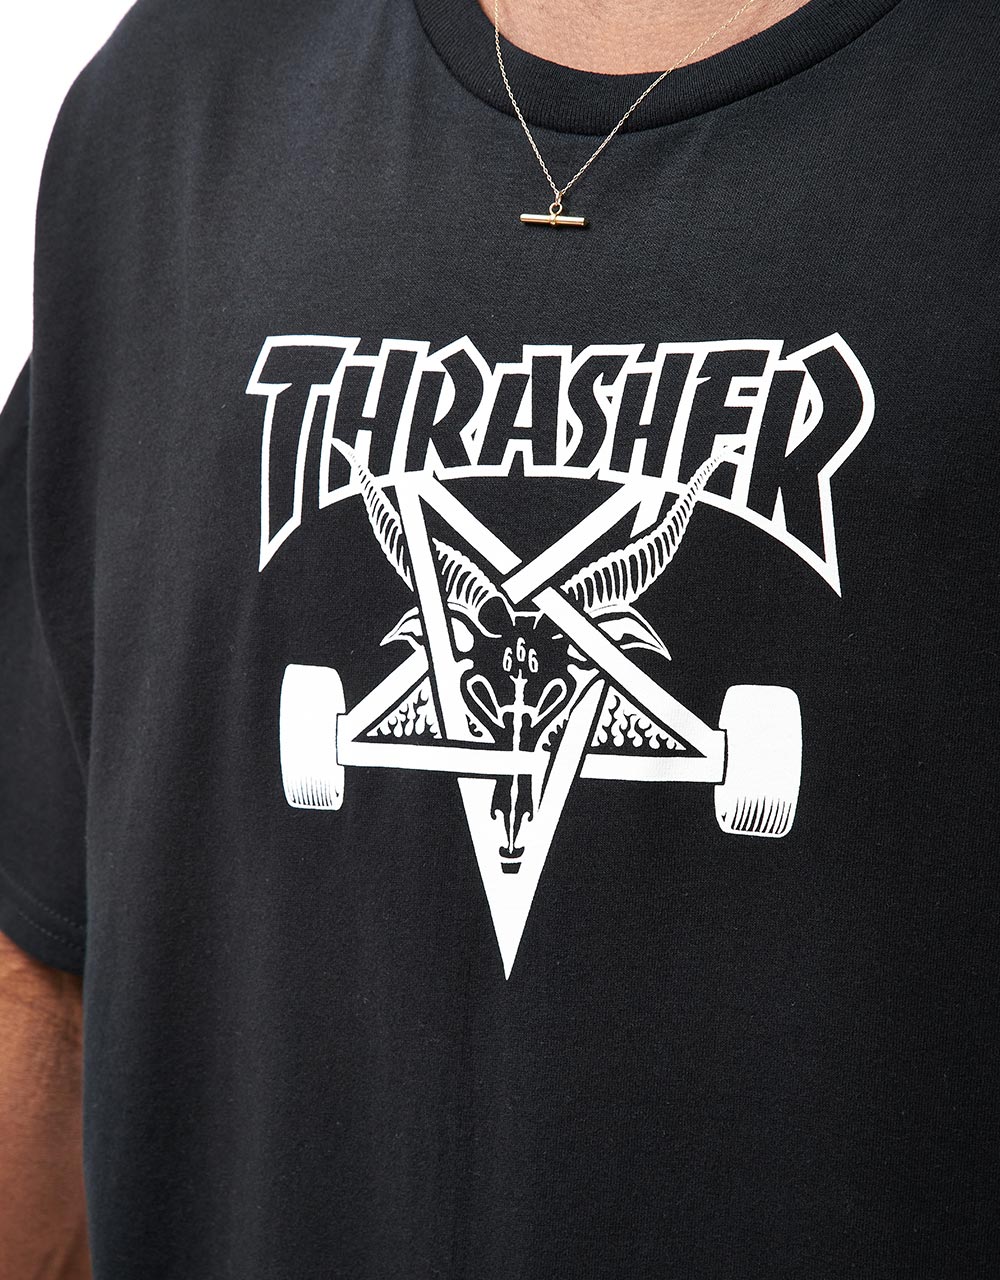 Thrasher Skategoat T-Shirt - Black